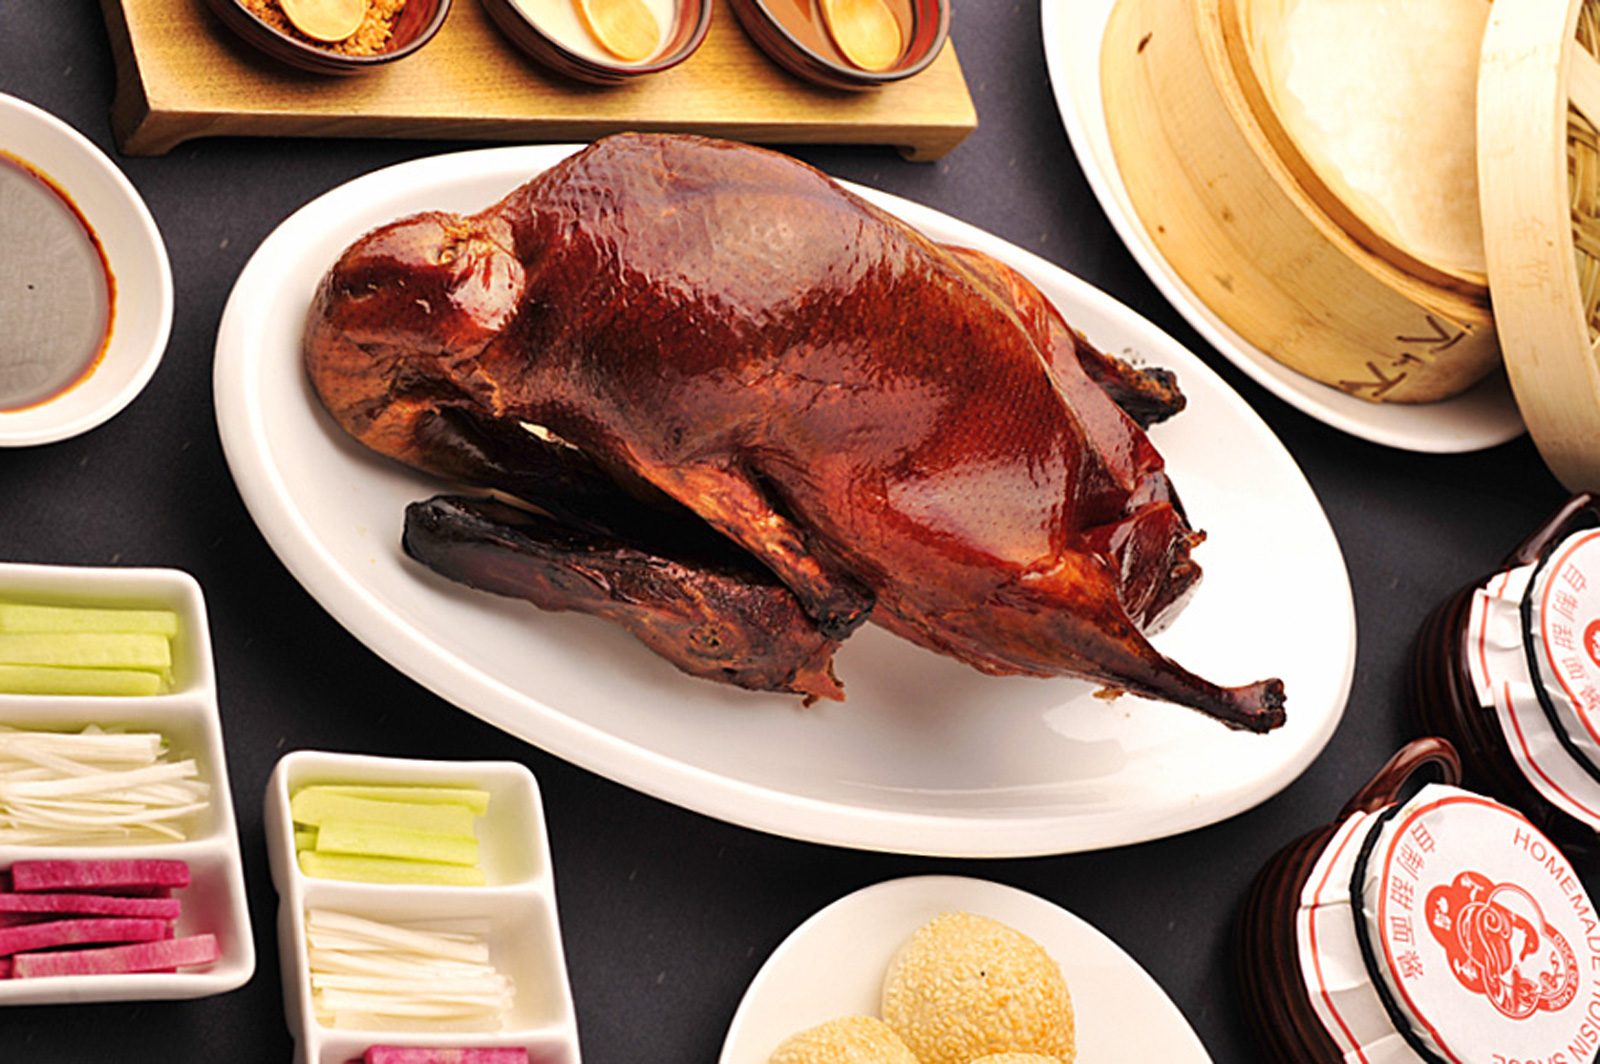 Peking roasted duck